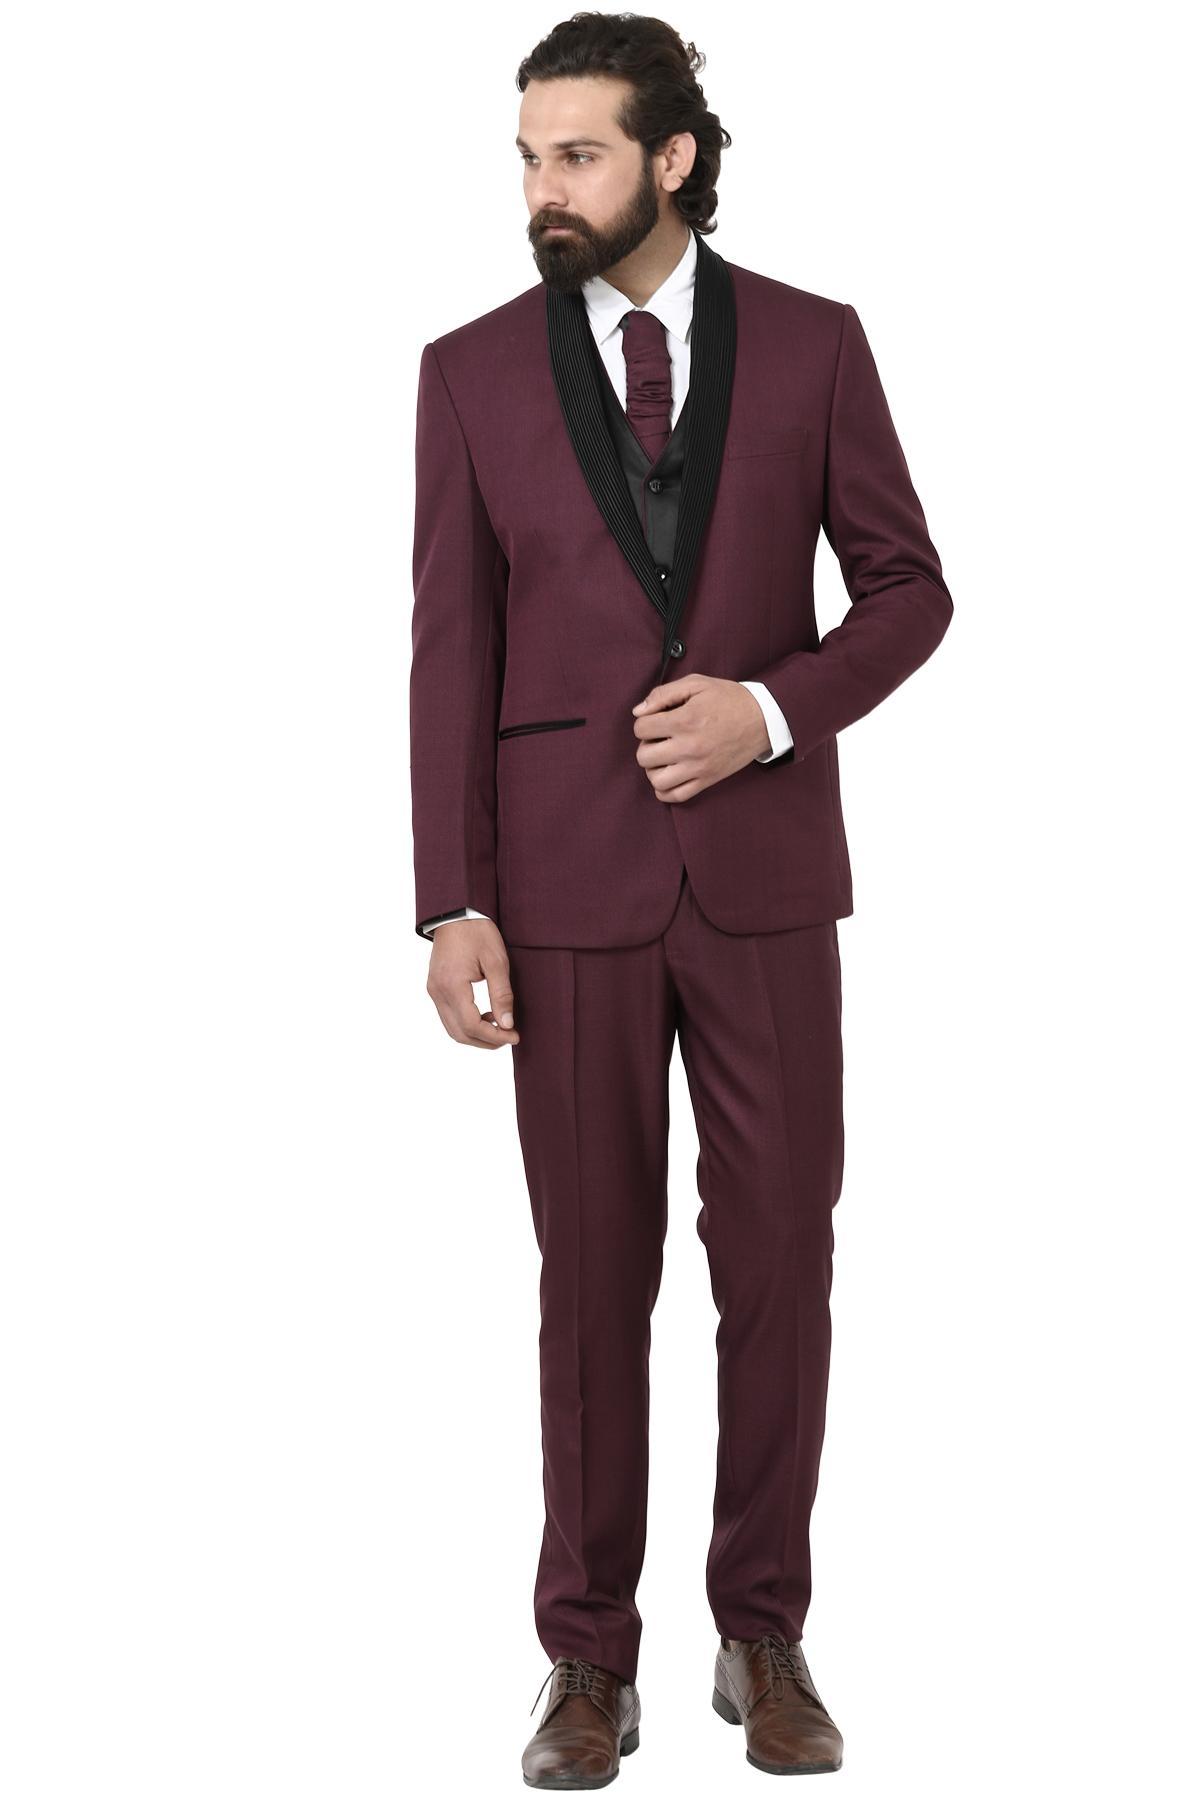 Top more than 73 wine tuxedo suit best